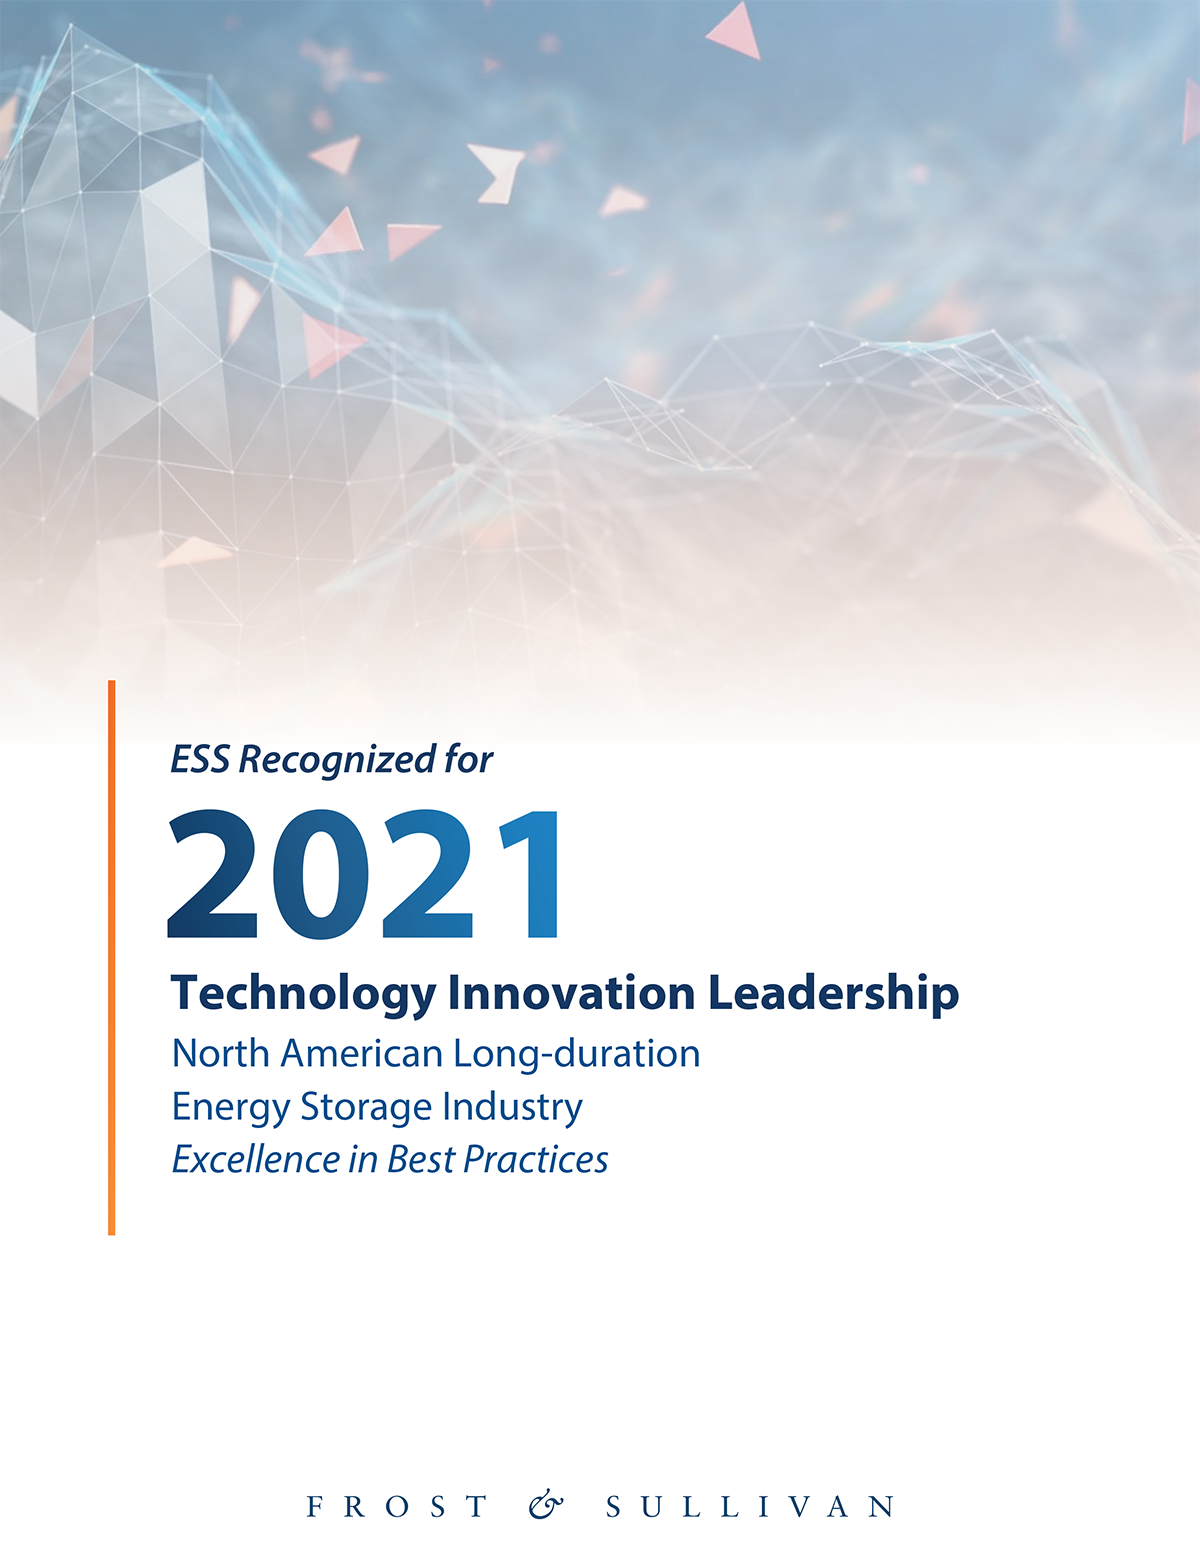 Frost & sullivan 2021 technology innovation leadership award image